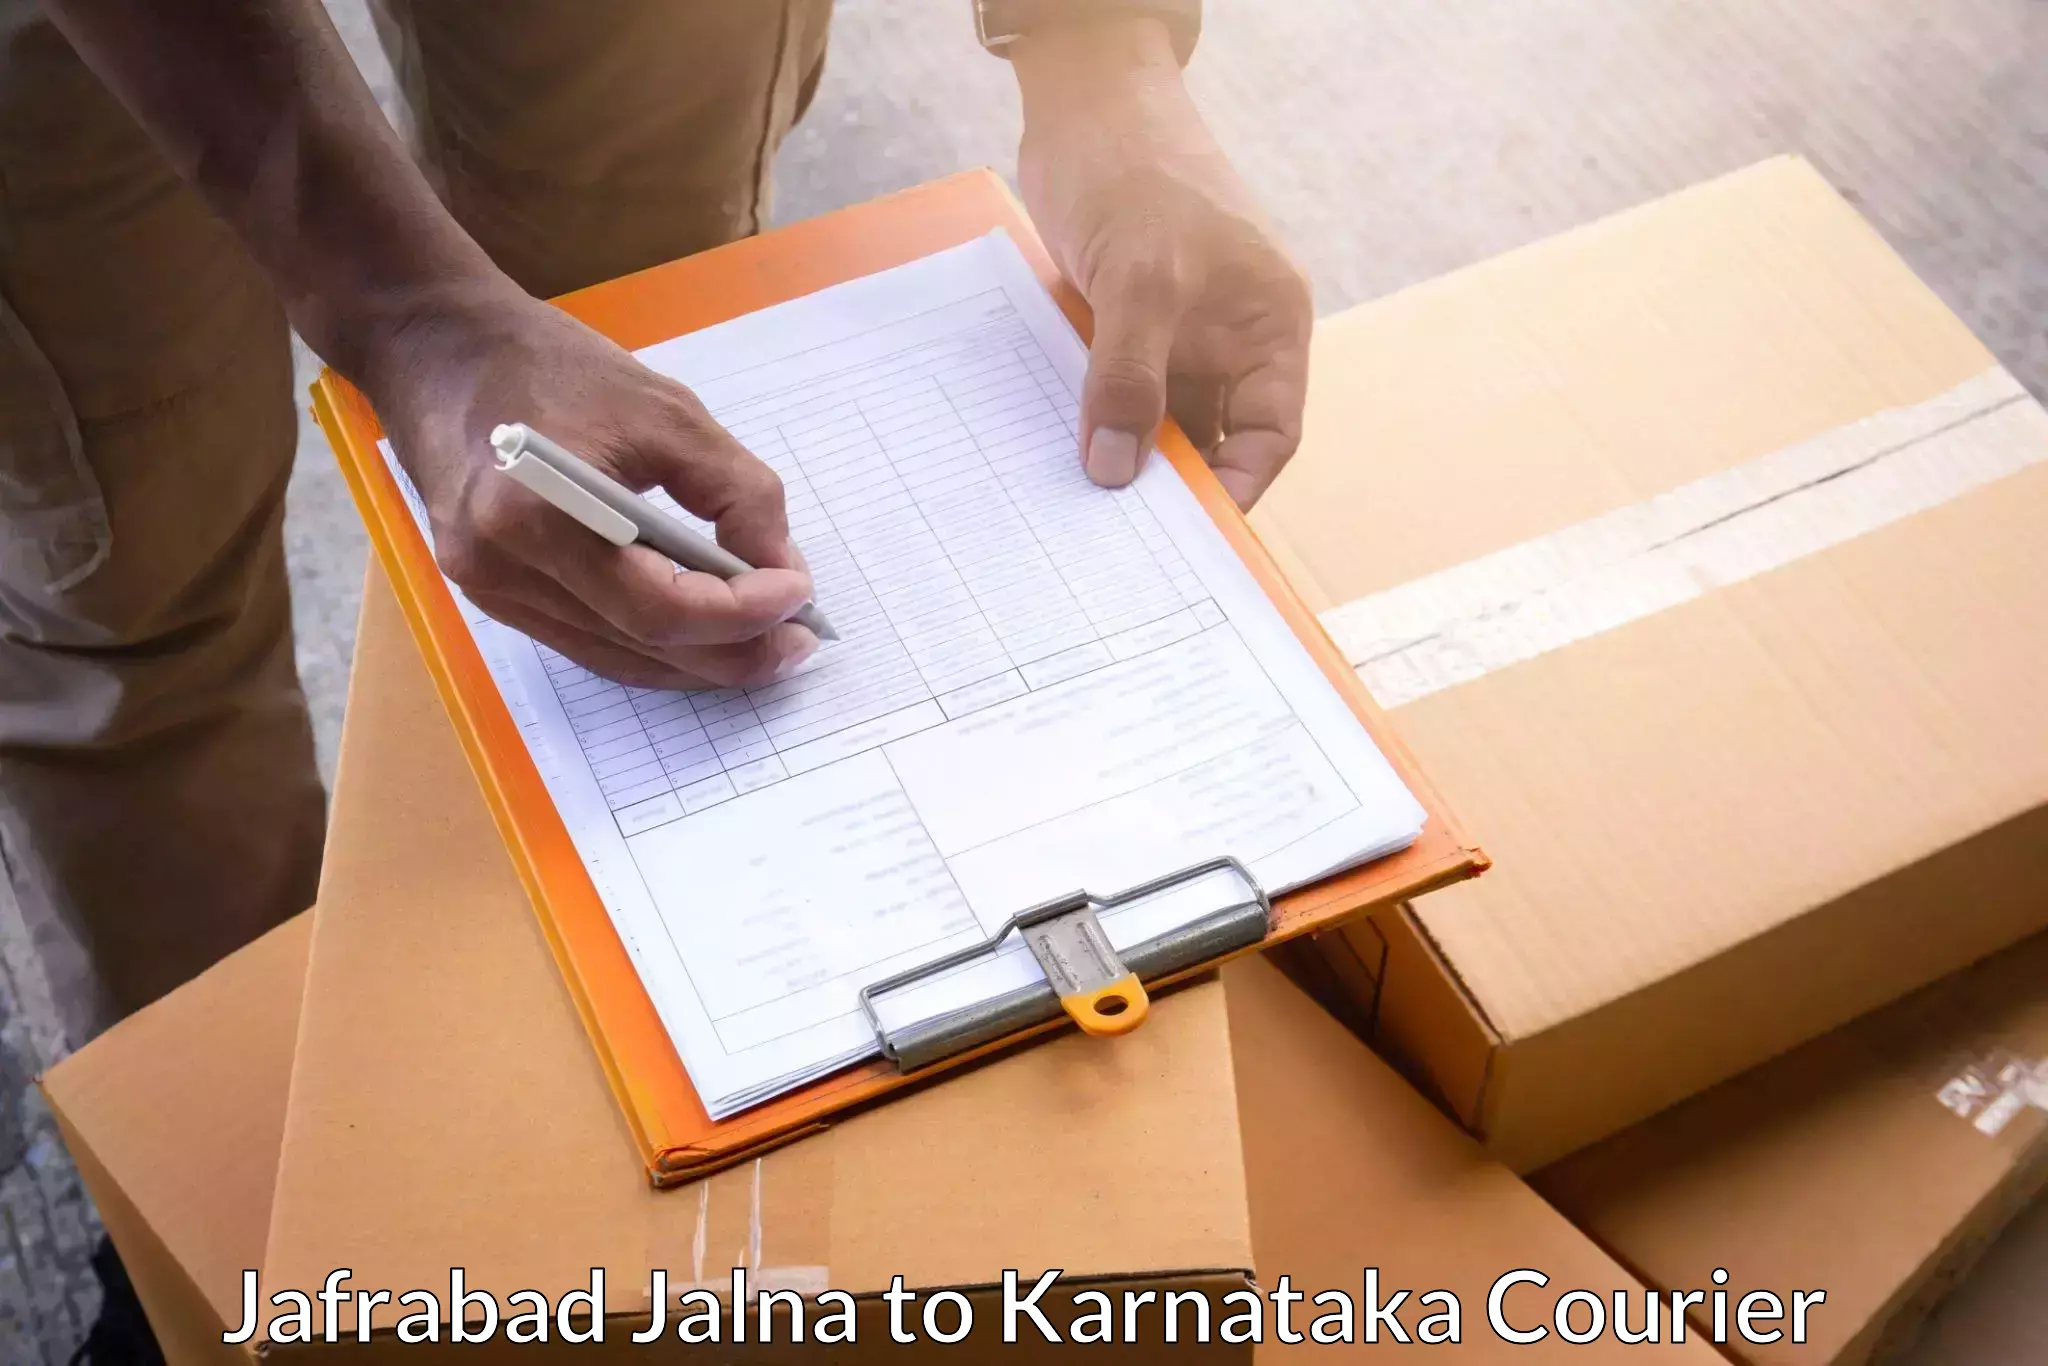 Next-day delivery options Jafrabad Jalna to Karnataka